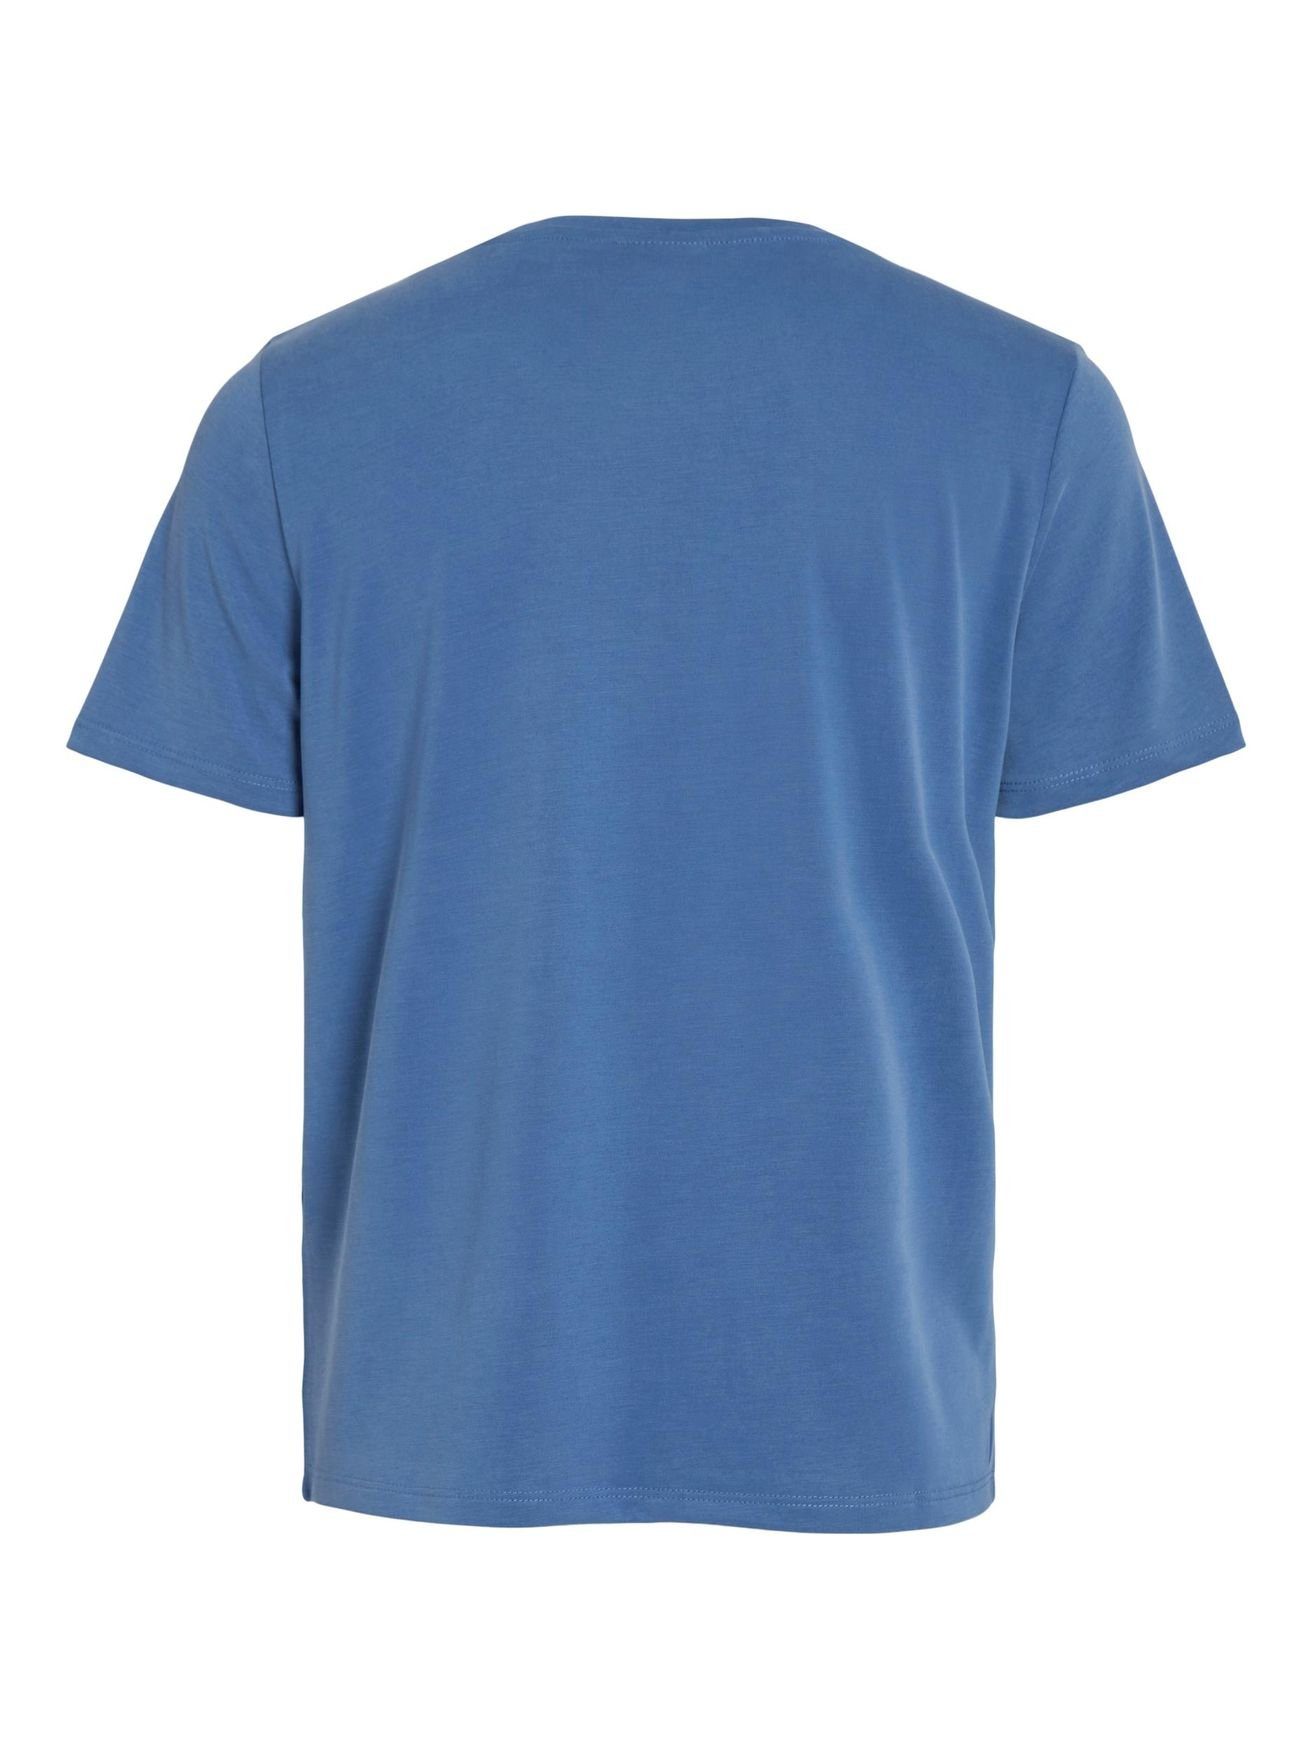 Vila 4870 T-Shirt Kurzarm Basic T-Shirt VIMODALA Blau in Rundhals Top Oberteil